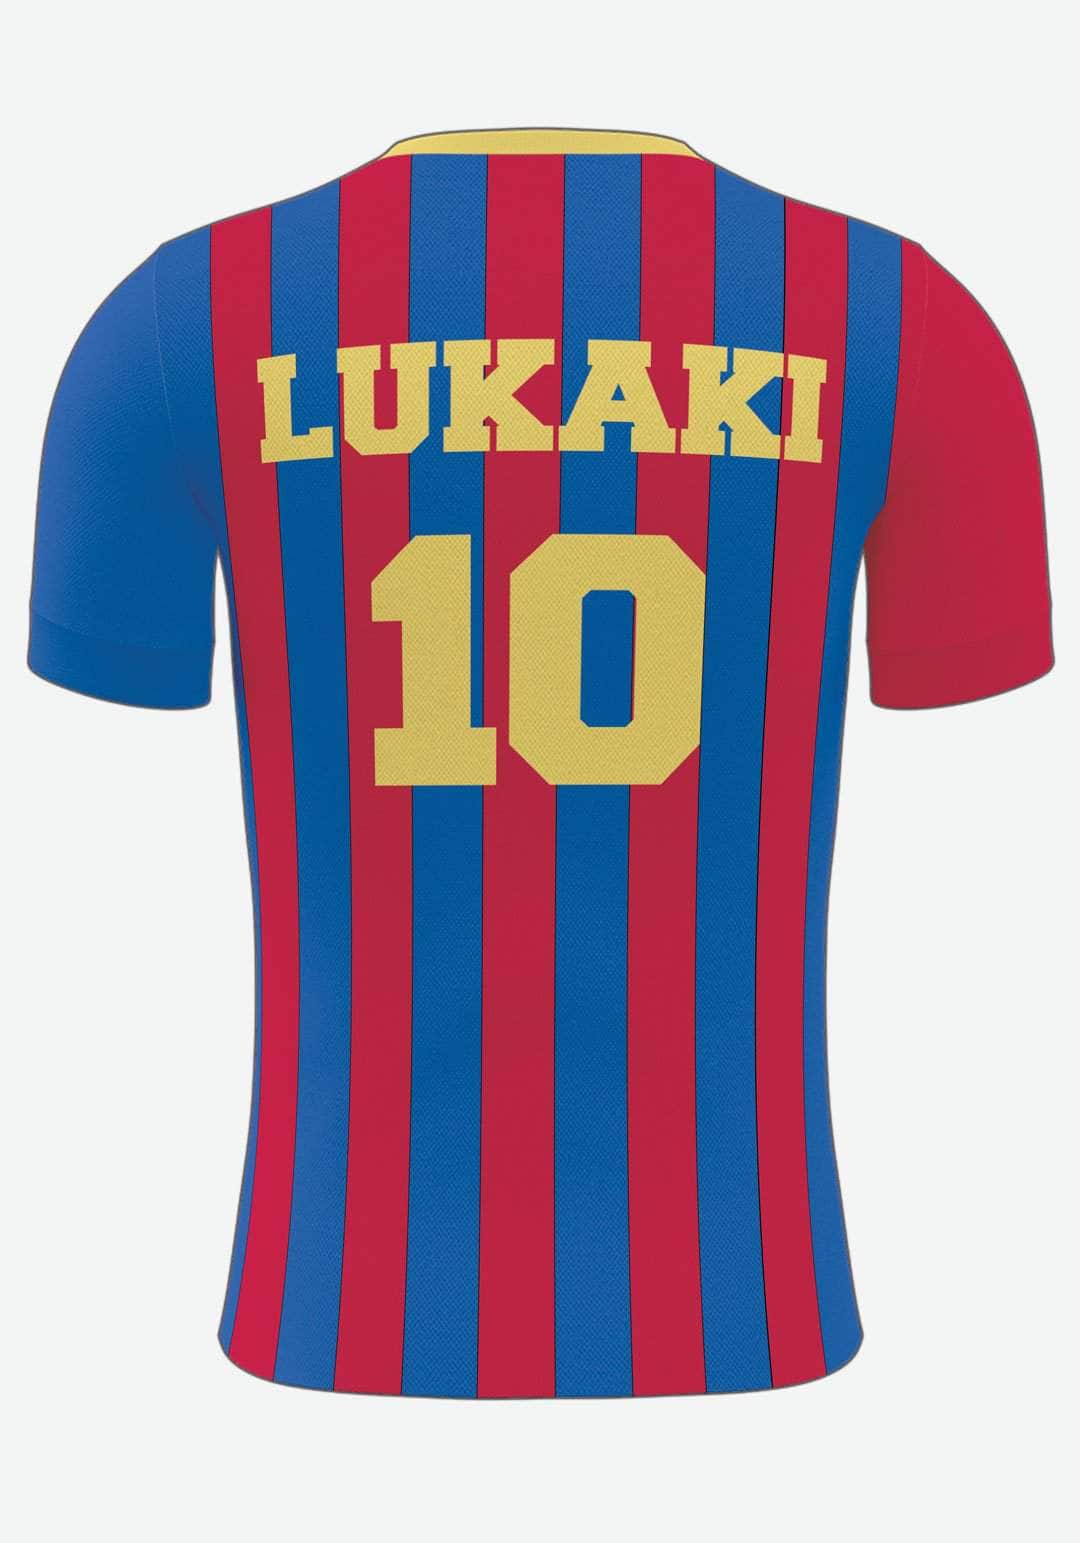 Se Barcelona Fodbold plakat - med eget navn og nummer, 30x40 hos Lukaki.dk